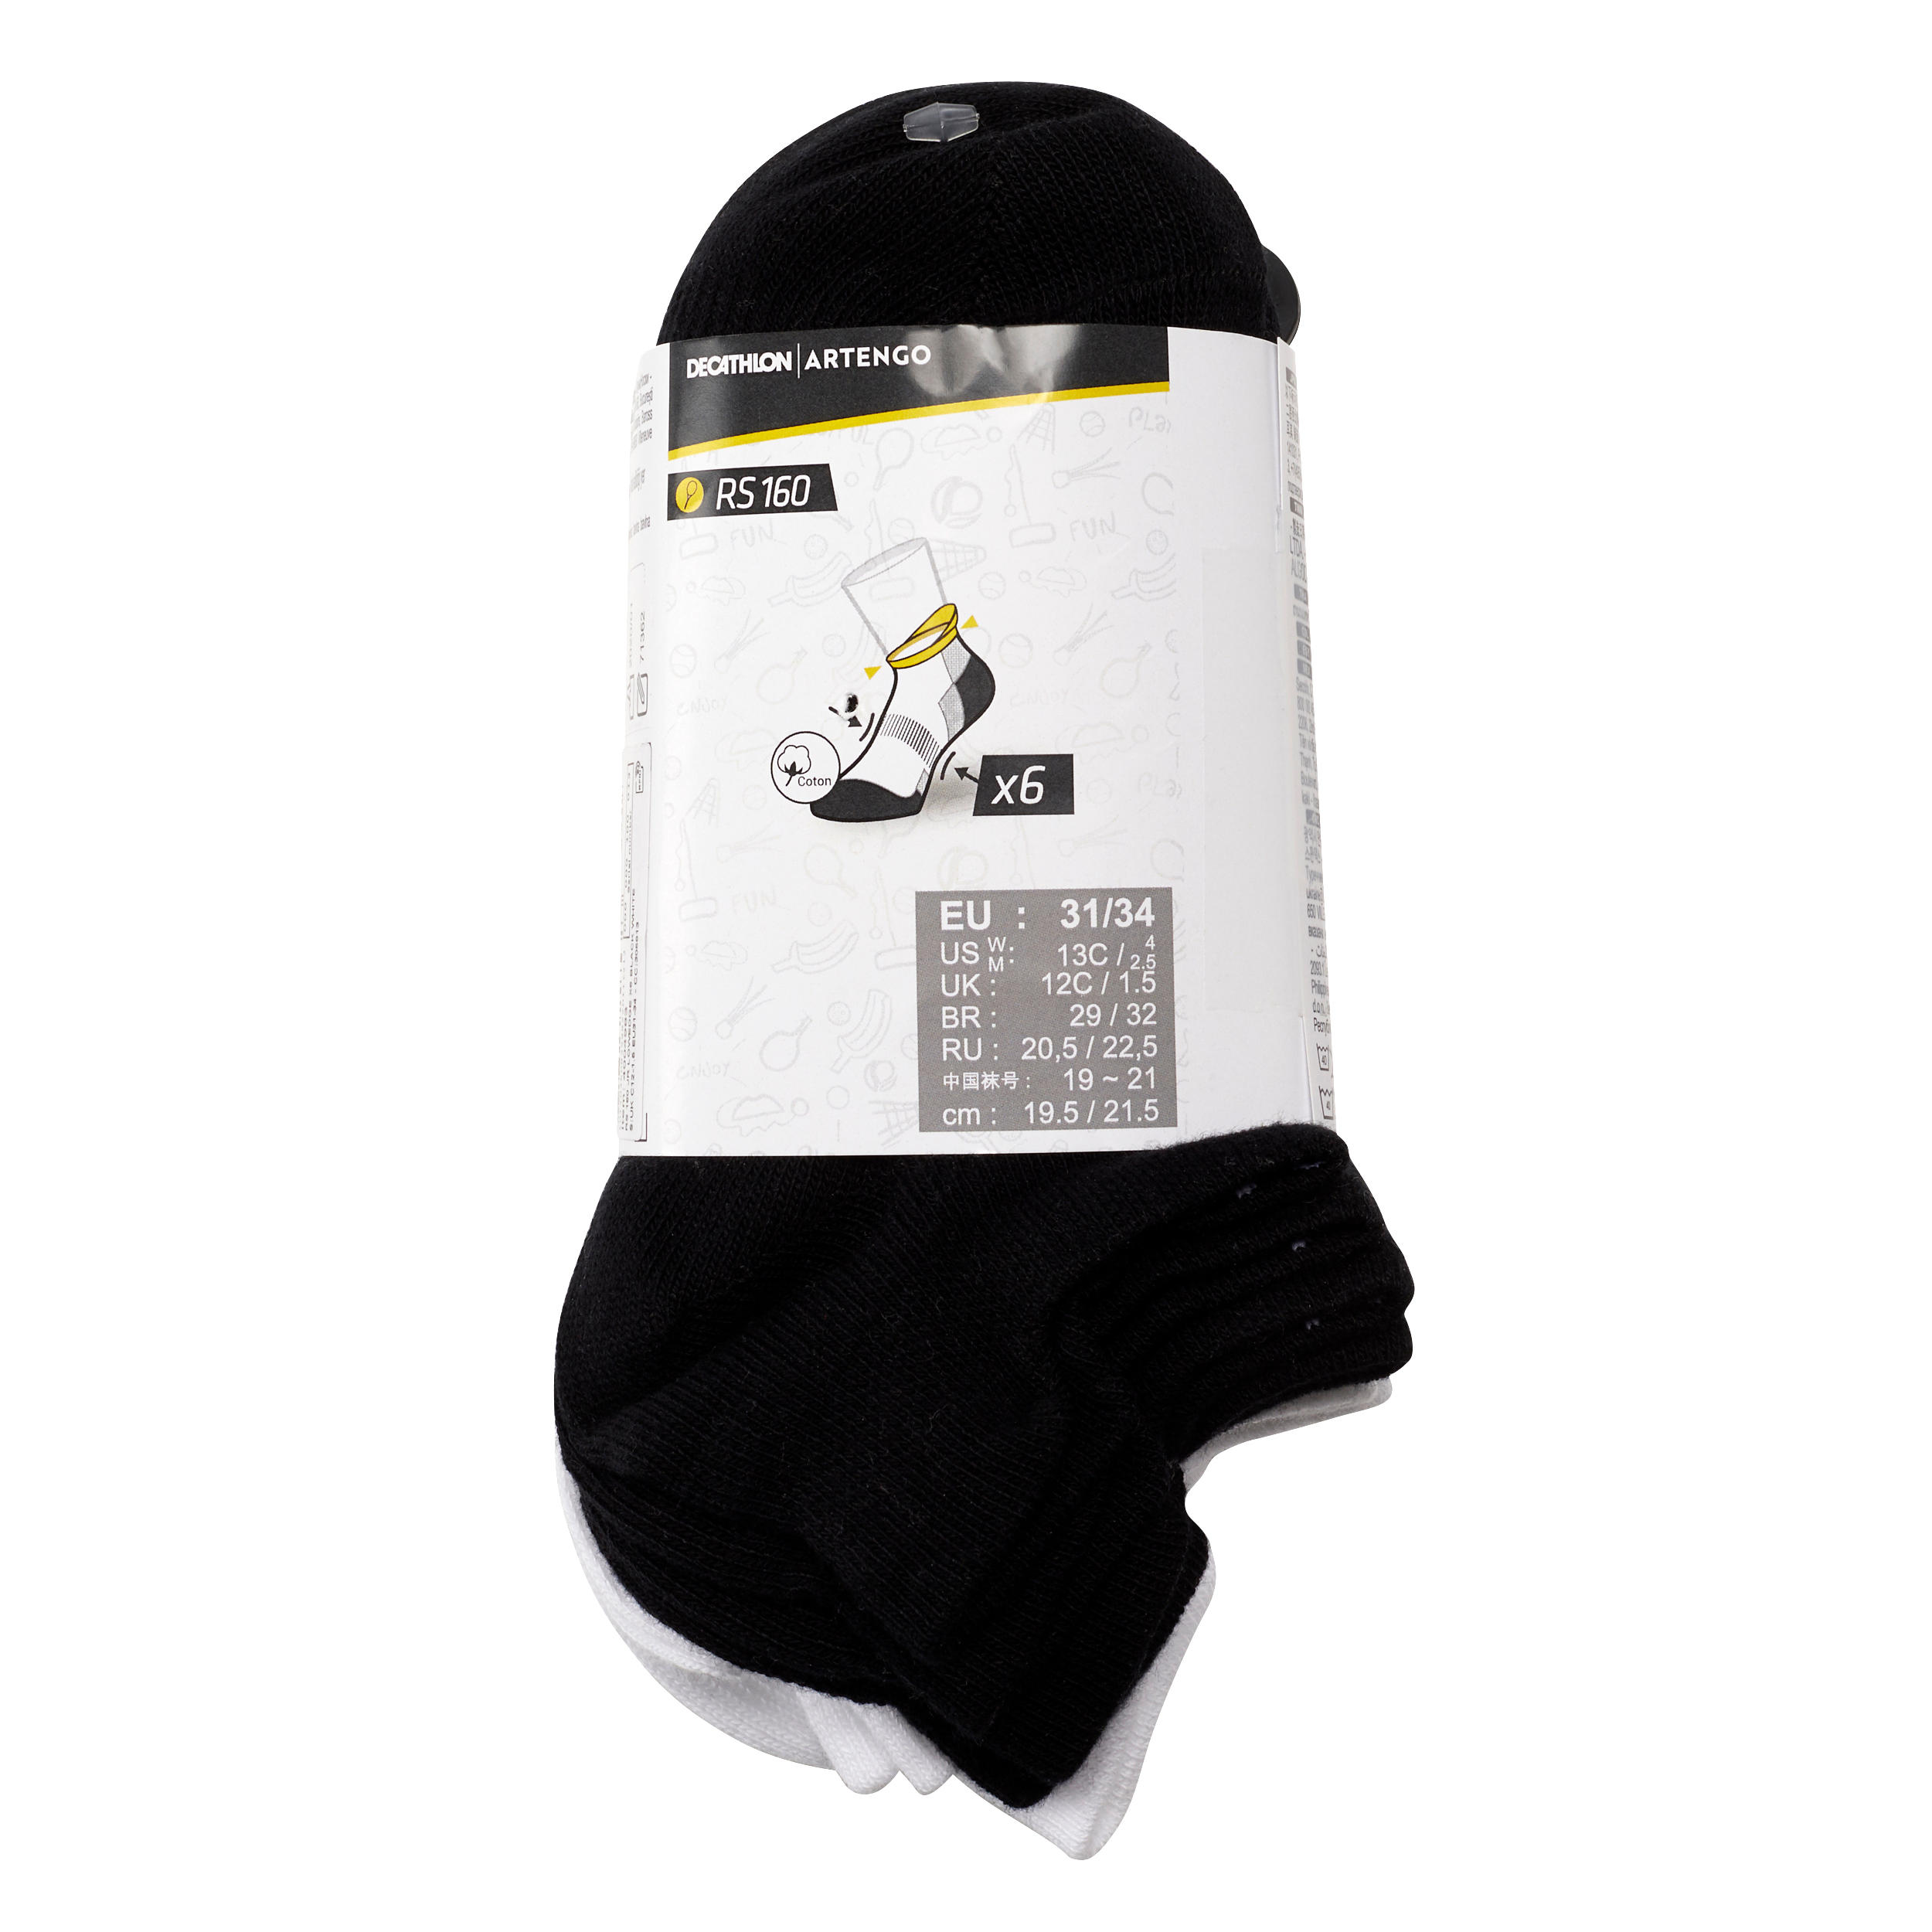 Kids' Lowedge Tennis Socks RS 160 6-Pack - Black/White/Blue 2/5